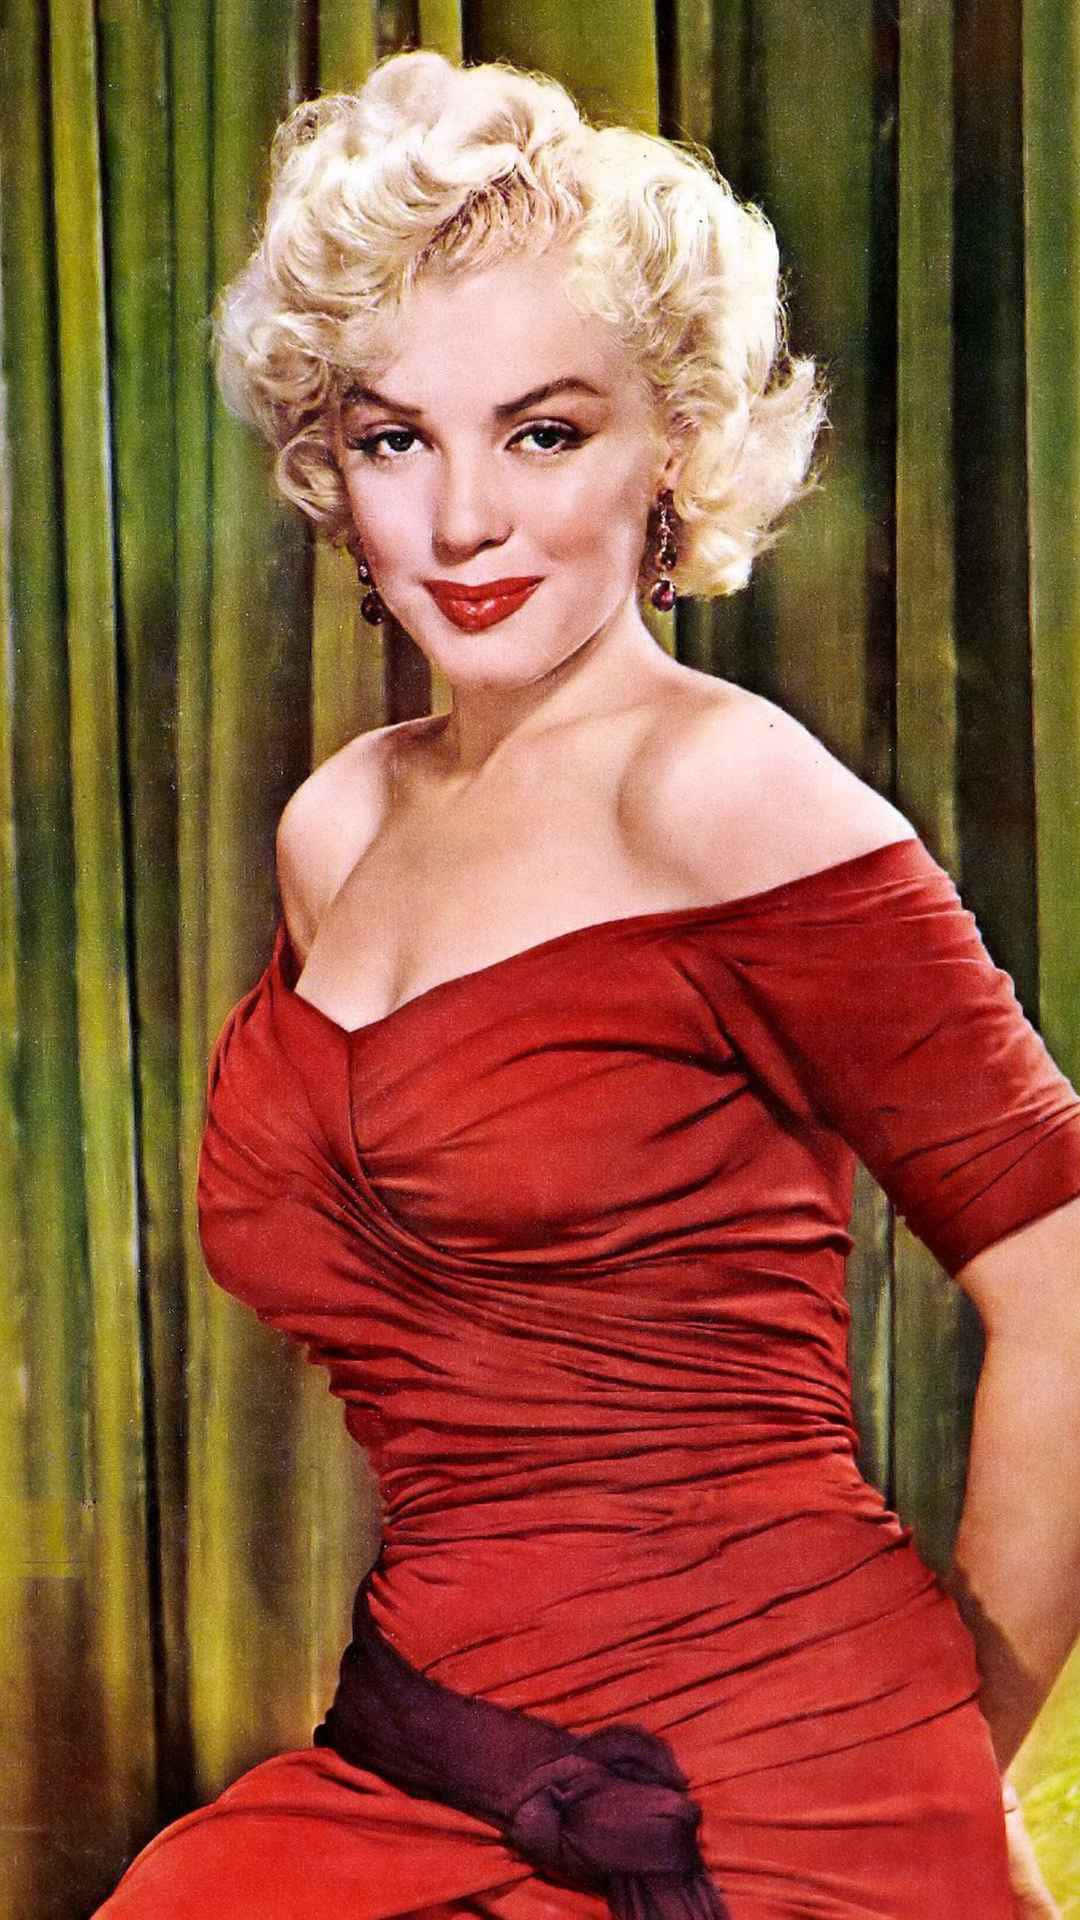 Wallpapernjut Av Superstjärnestilen Med Marilyn Monroe Iphone-bakgrundsbilden. Wallpaper